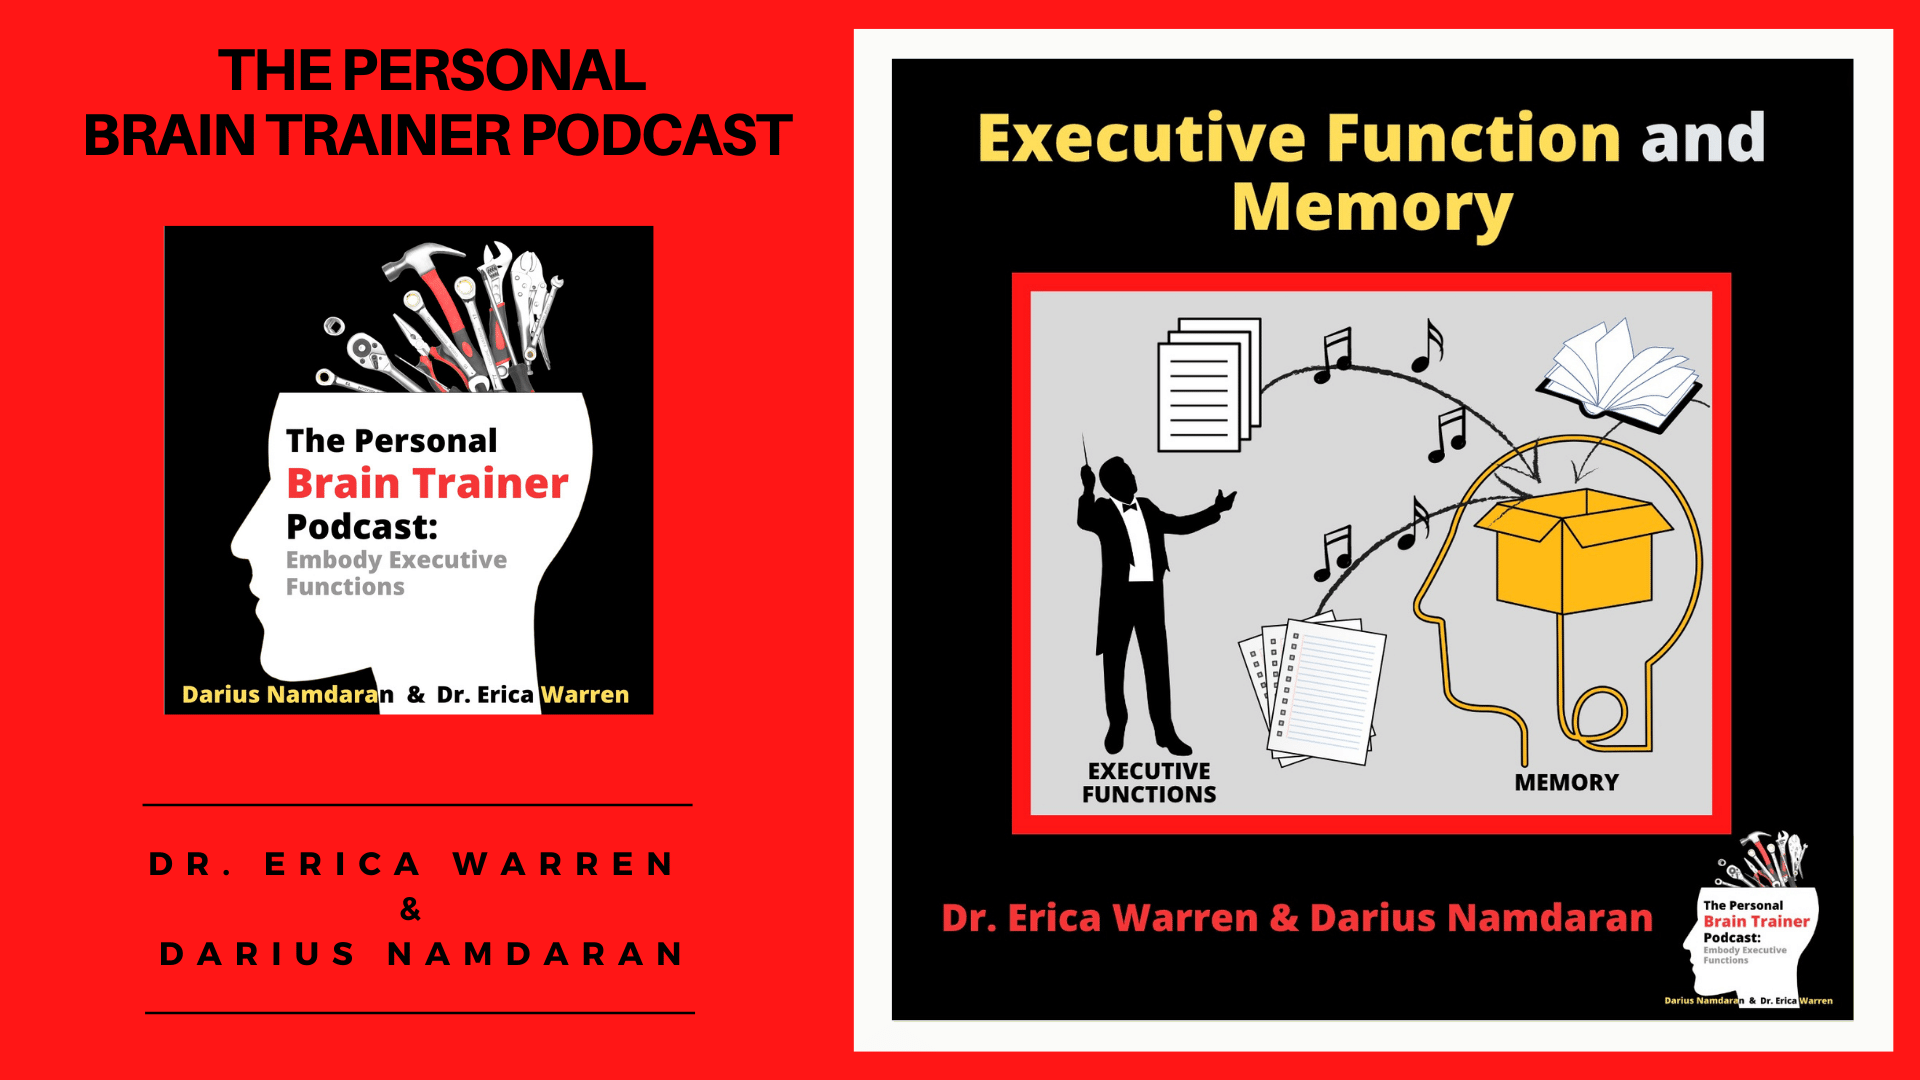 Executive Functions and Memory has man conducting his brain